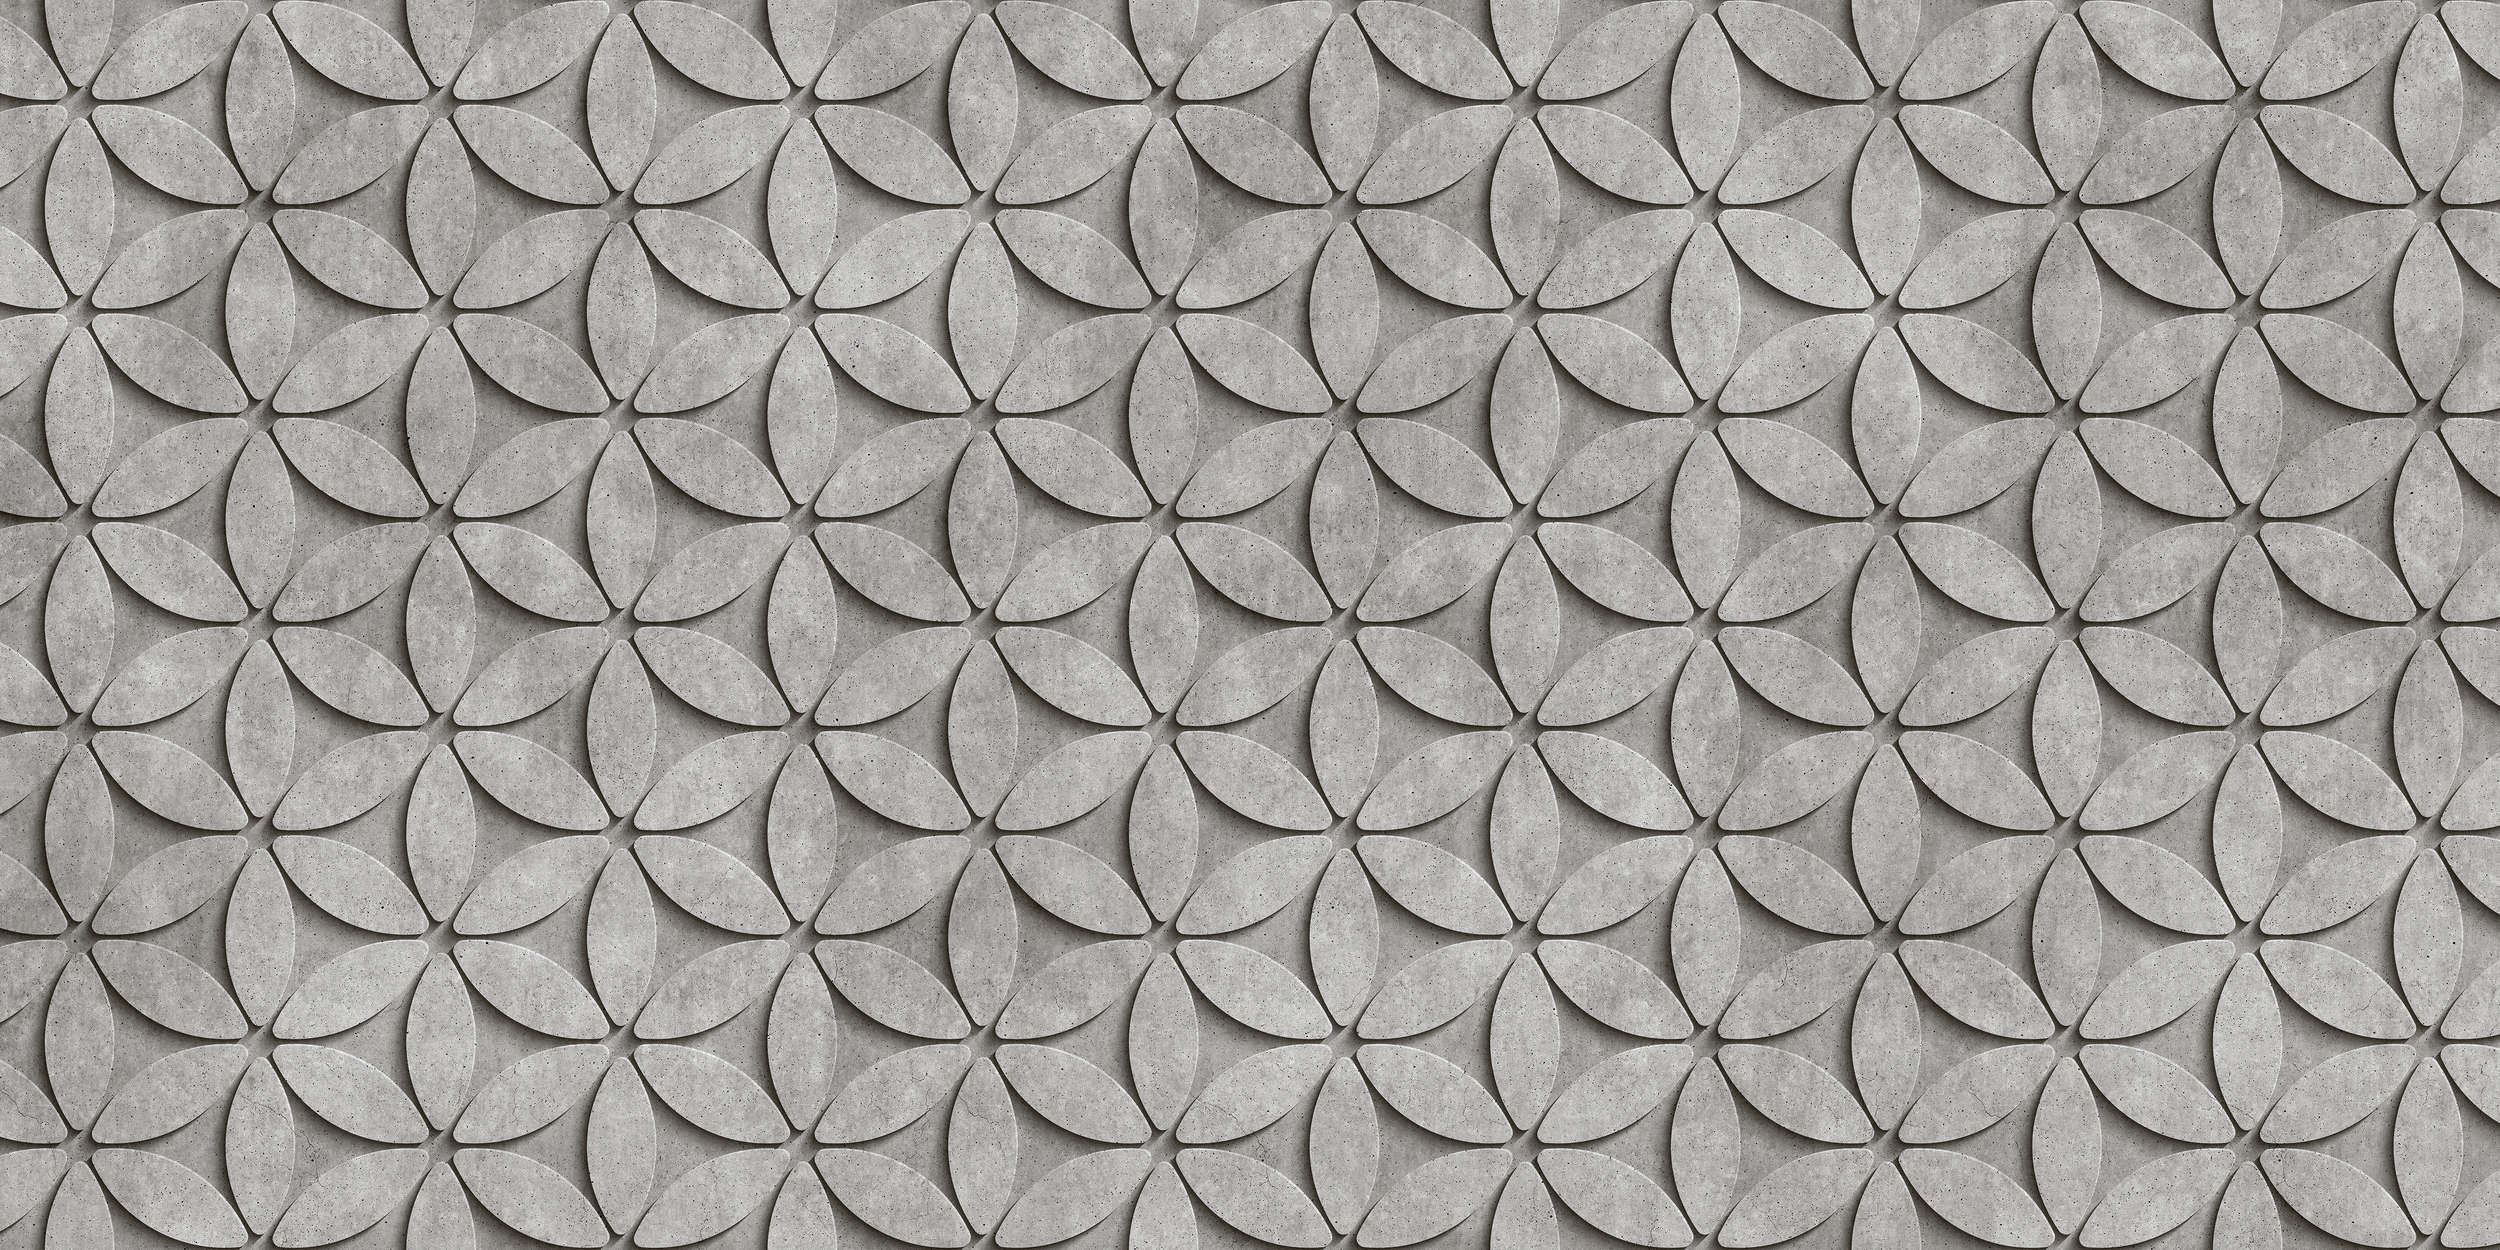             Tile 1 - Fototapete in Cooler 3D Beton-Polygone – Grau, Schwarz | Premium Glattvlies
        